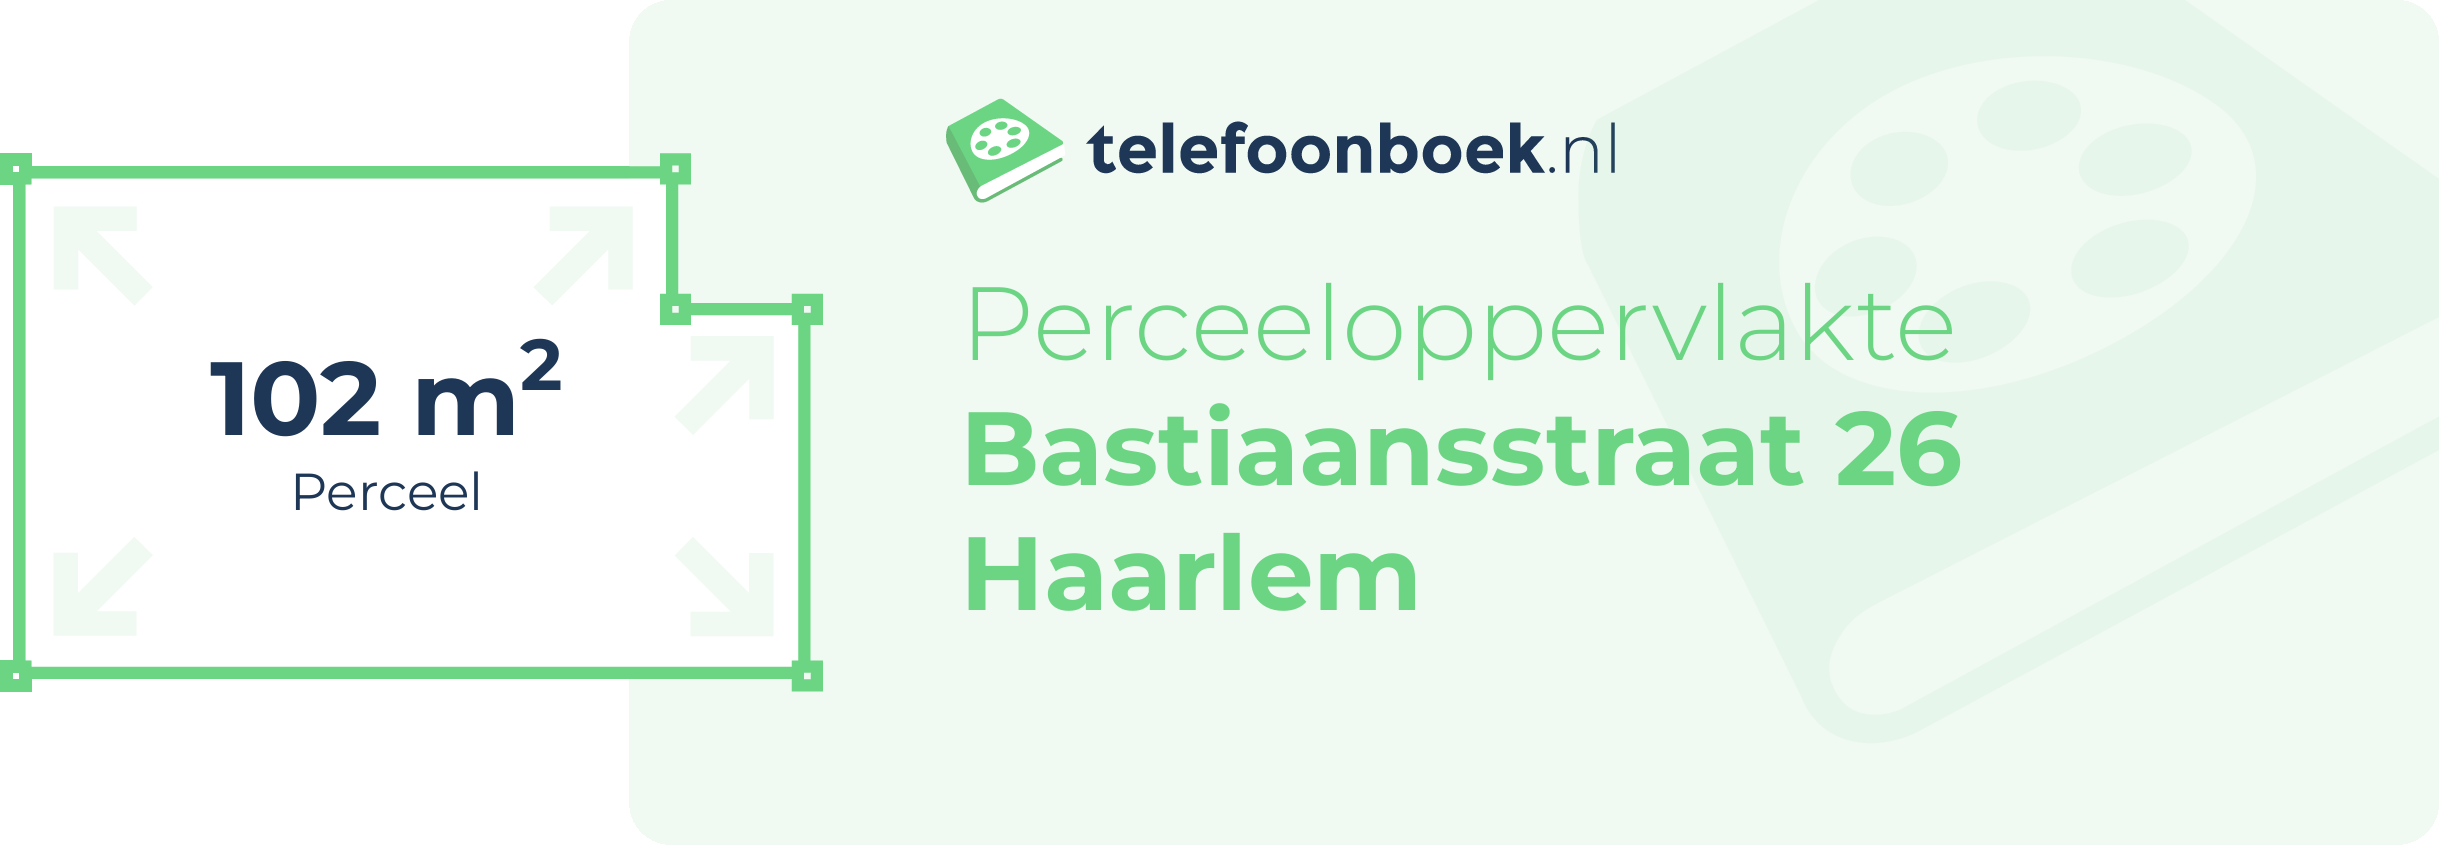 Perceeloppervlakte Bastiaansstraat 26 Haarlem